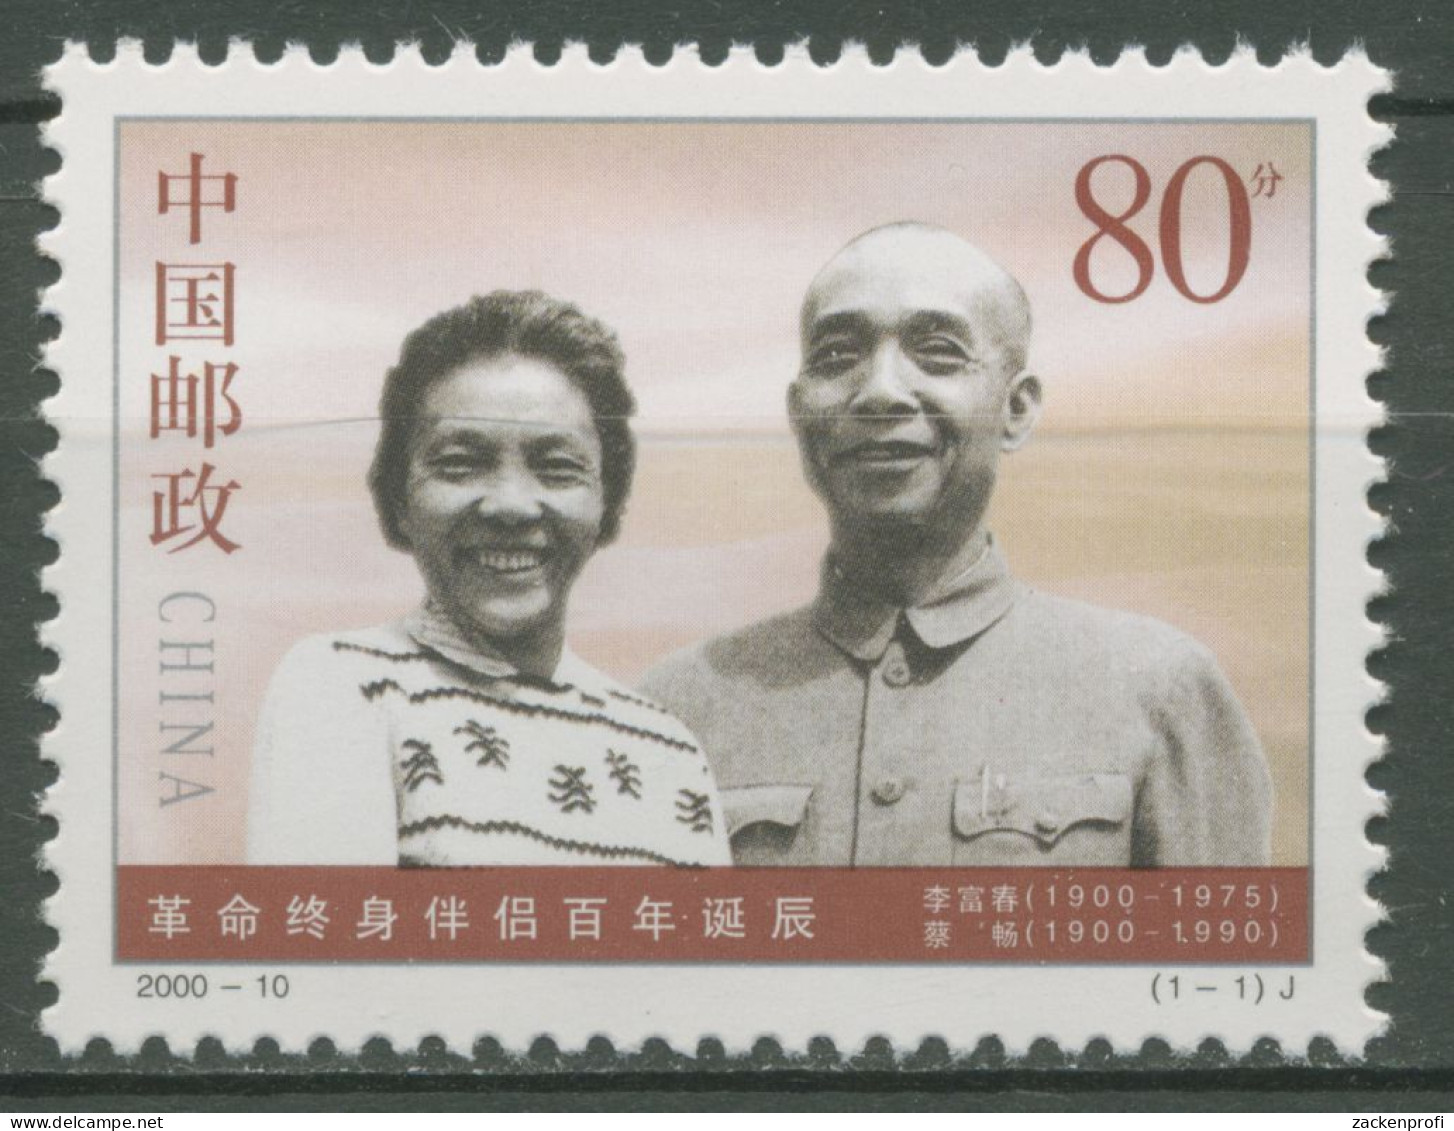 China 2000 Revolutionäre Cai Chang & Li Fuchun 3147 Postfrisch - Unused Stamps